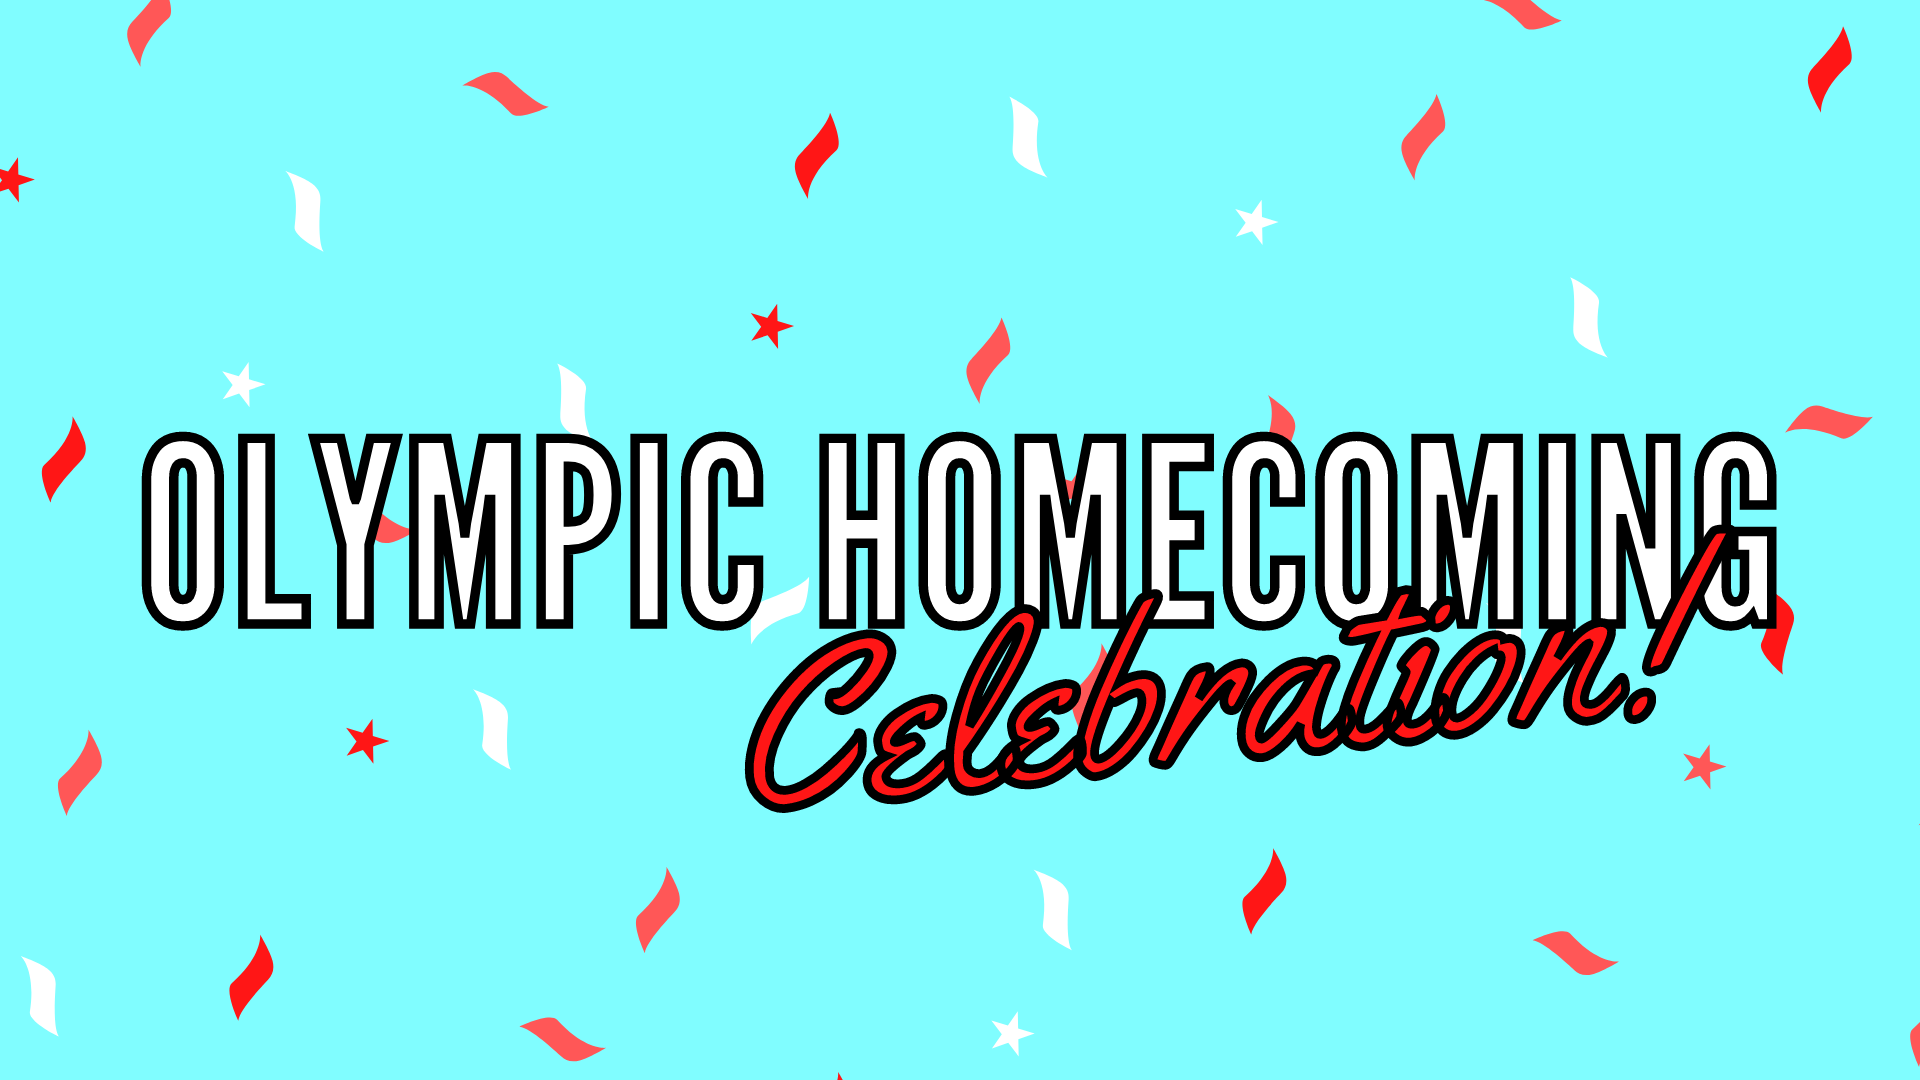 Olympic Homecoming Celebration